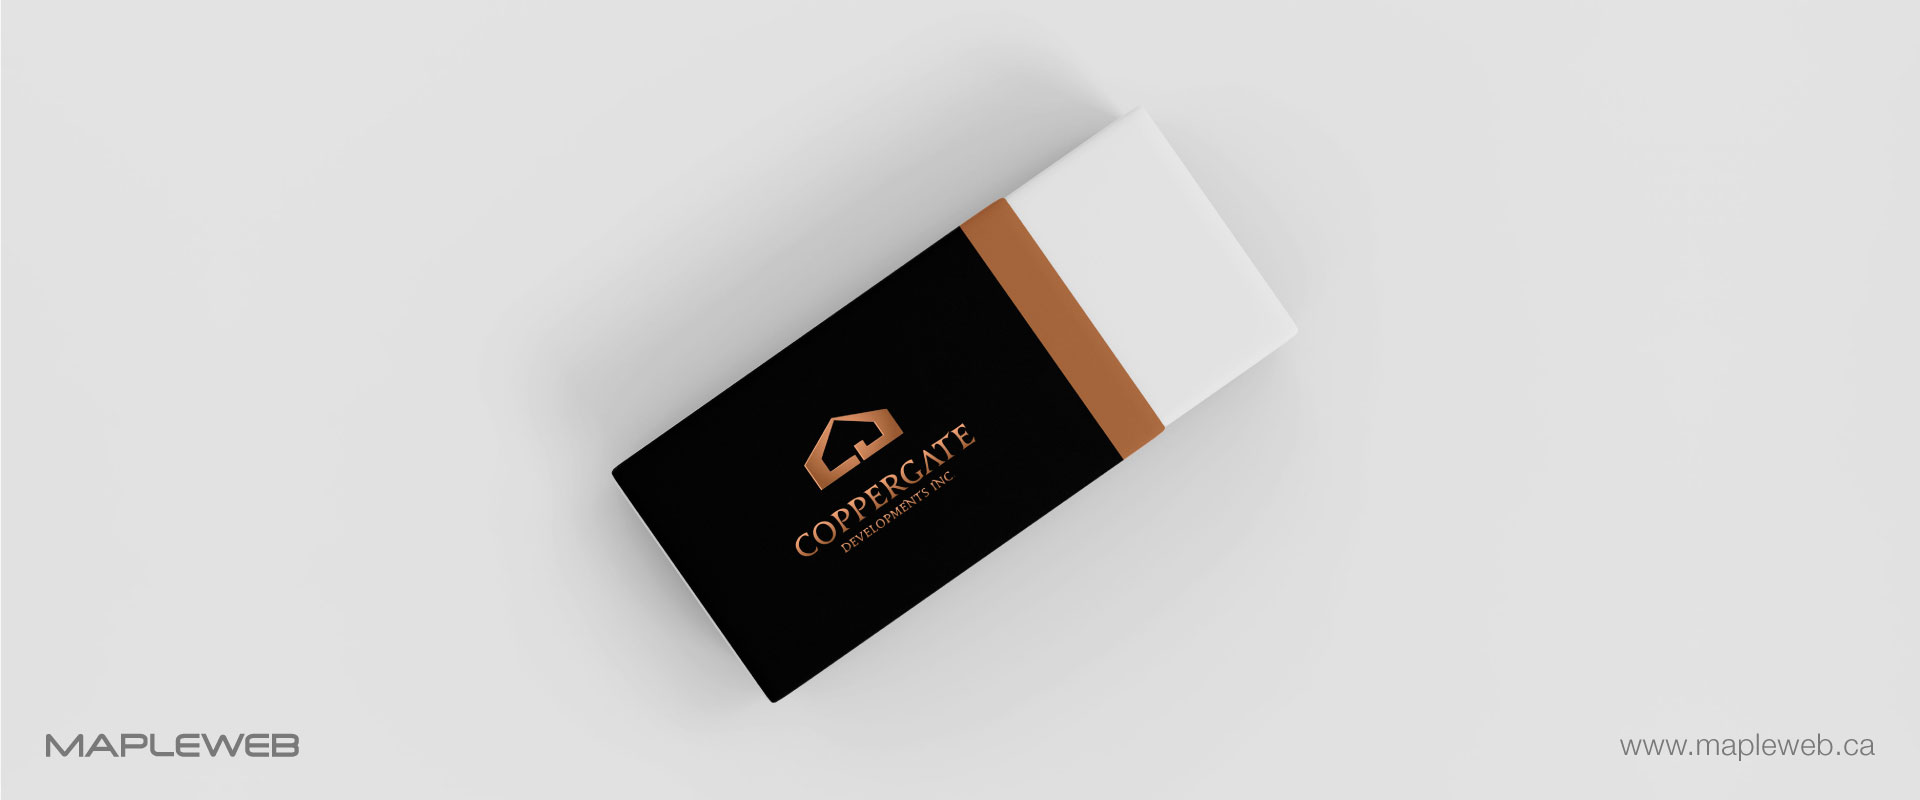 coppergate-brand-logo-design-by-mapleweb-vancouver-canada-eraser-mock